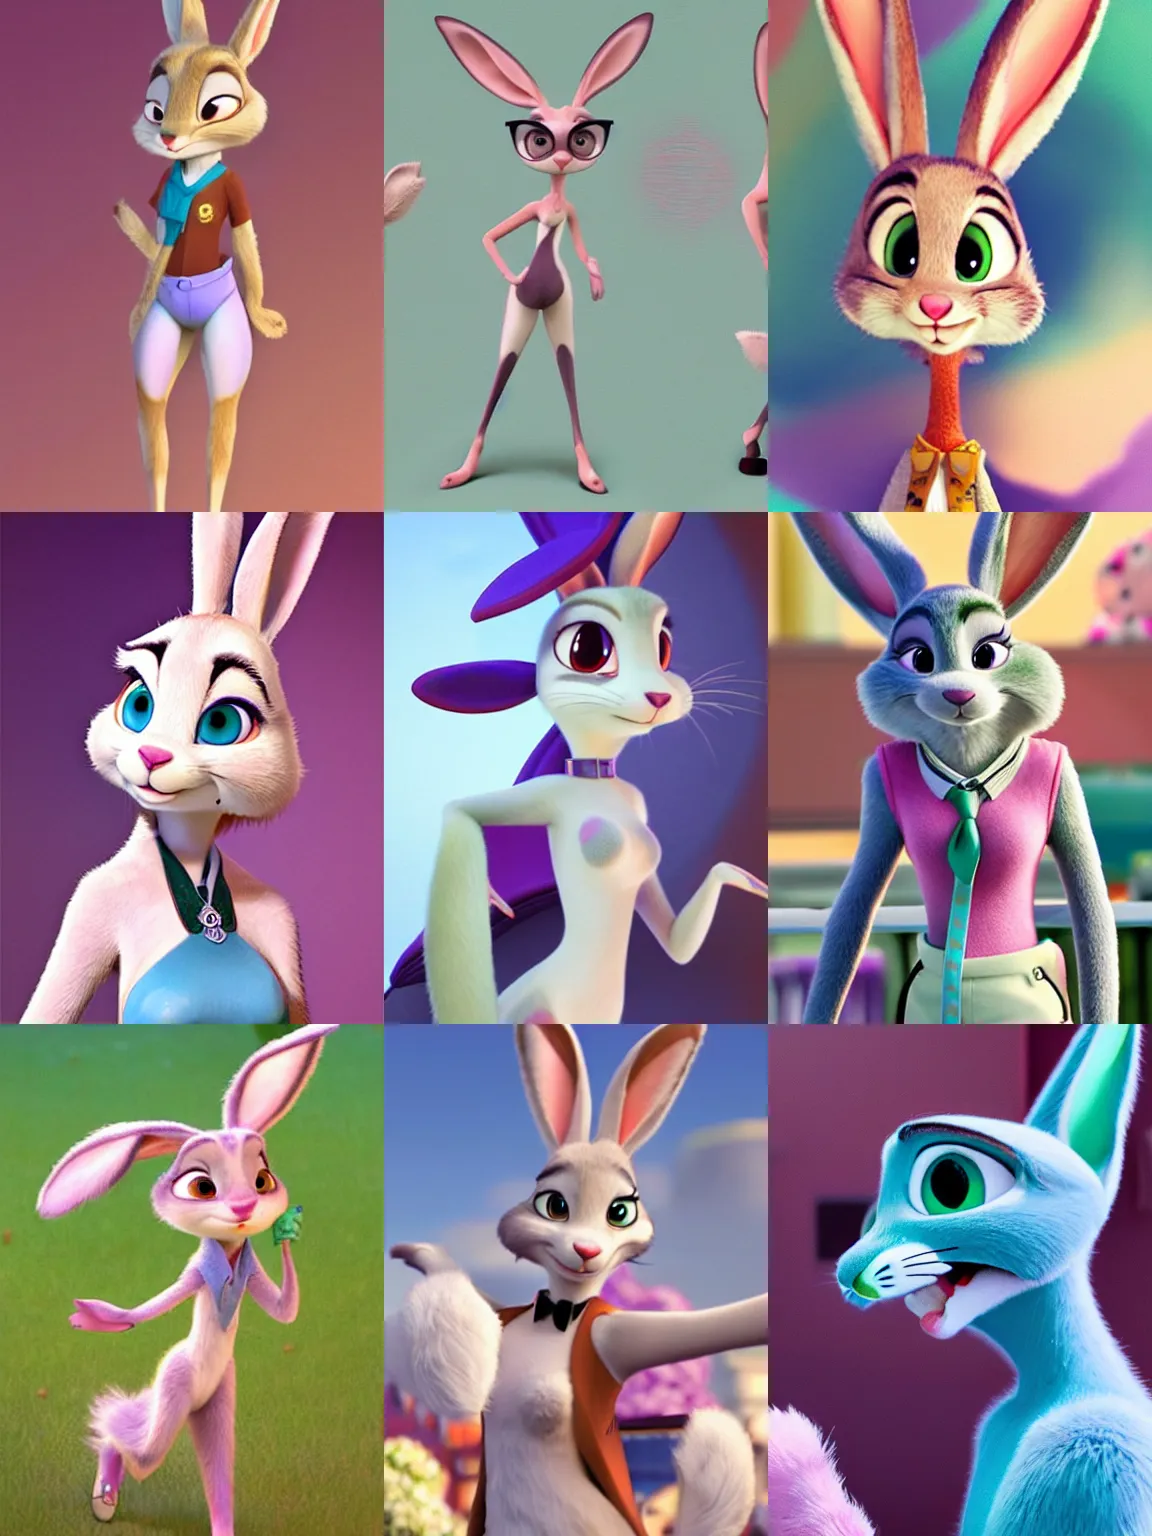 Prompt: slim sexy feminine rabbitbunny from zootopia, female beautiful rabbit from pixar, fluffy gorgeous zootopia bunny femme